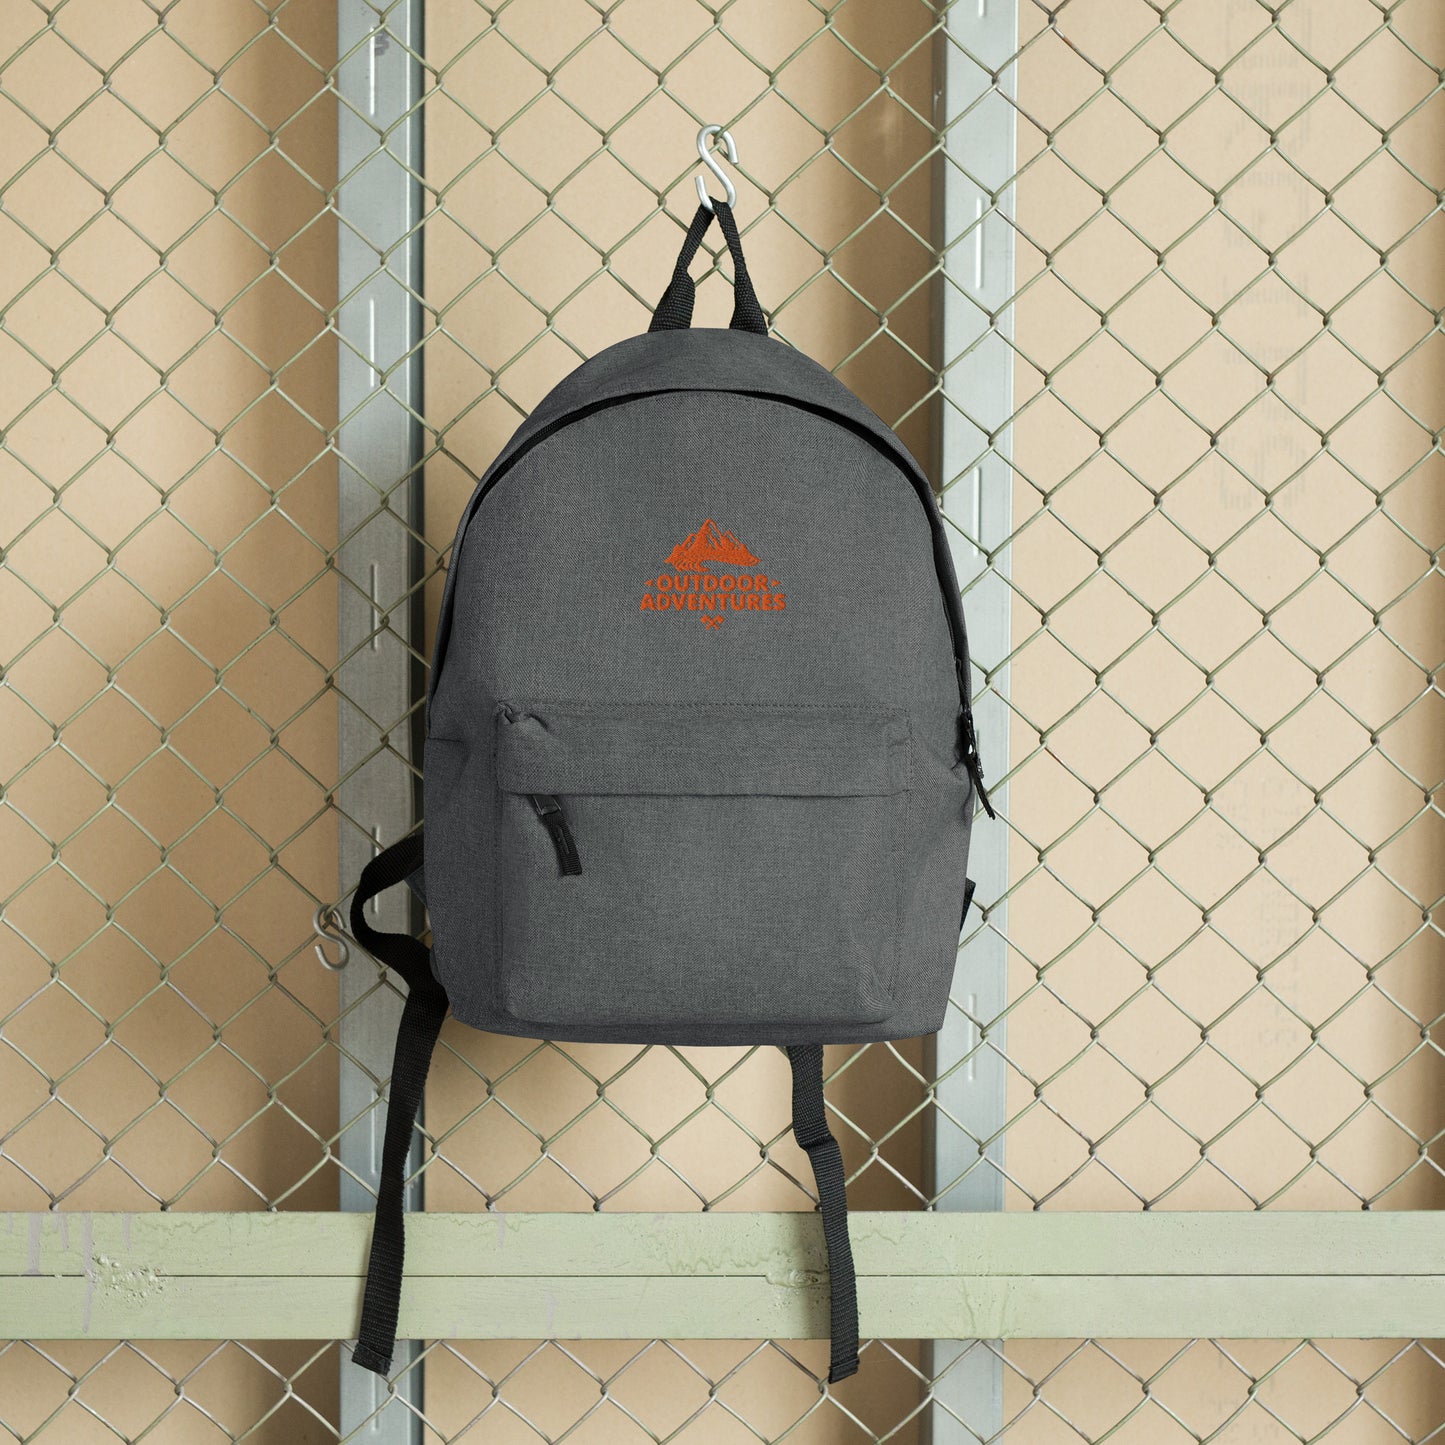 Outdoor Adventures - Embroidered Backpack - HobbyMeFree